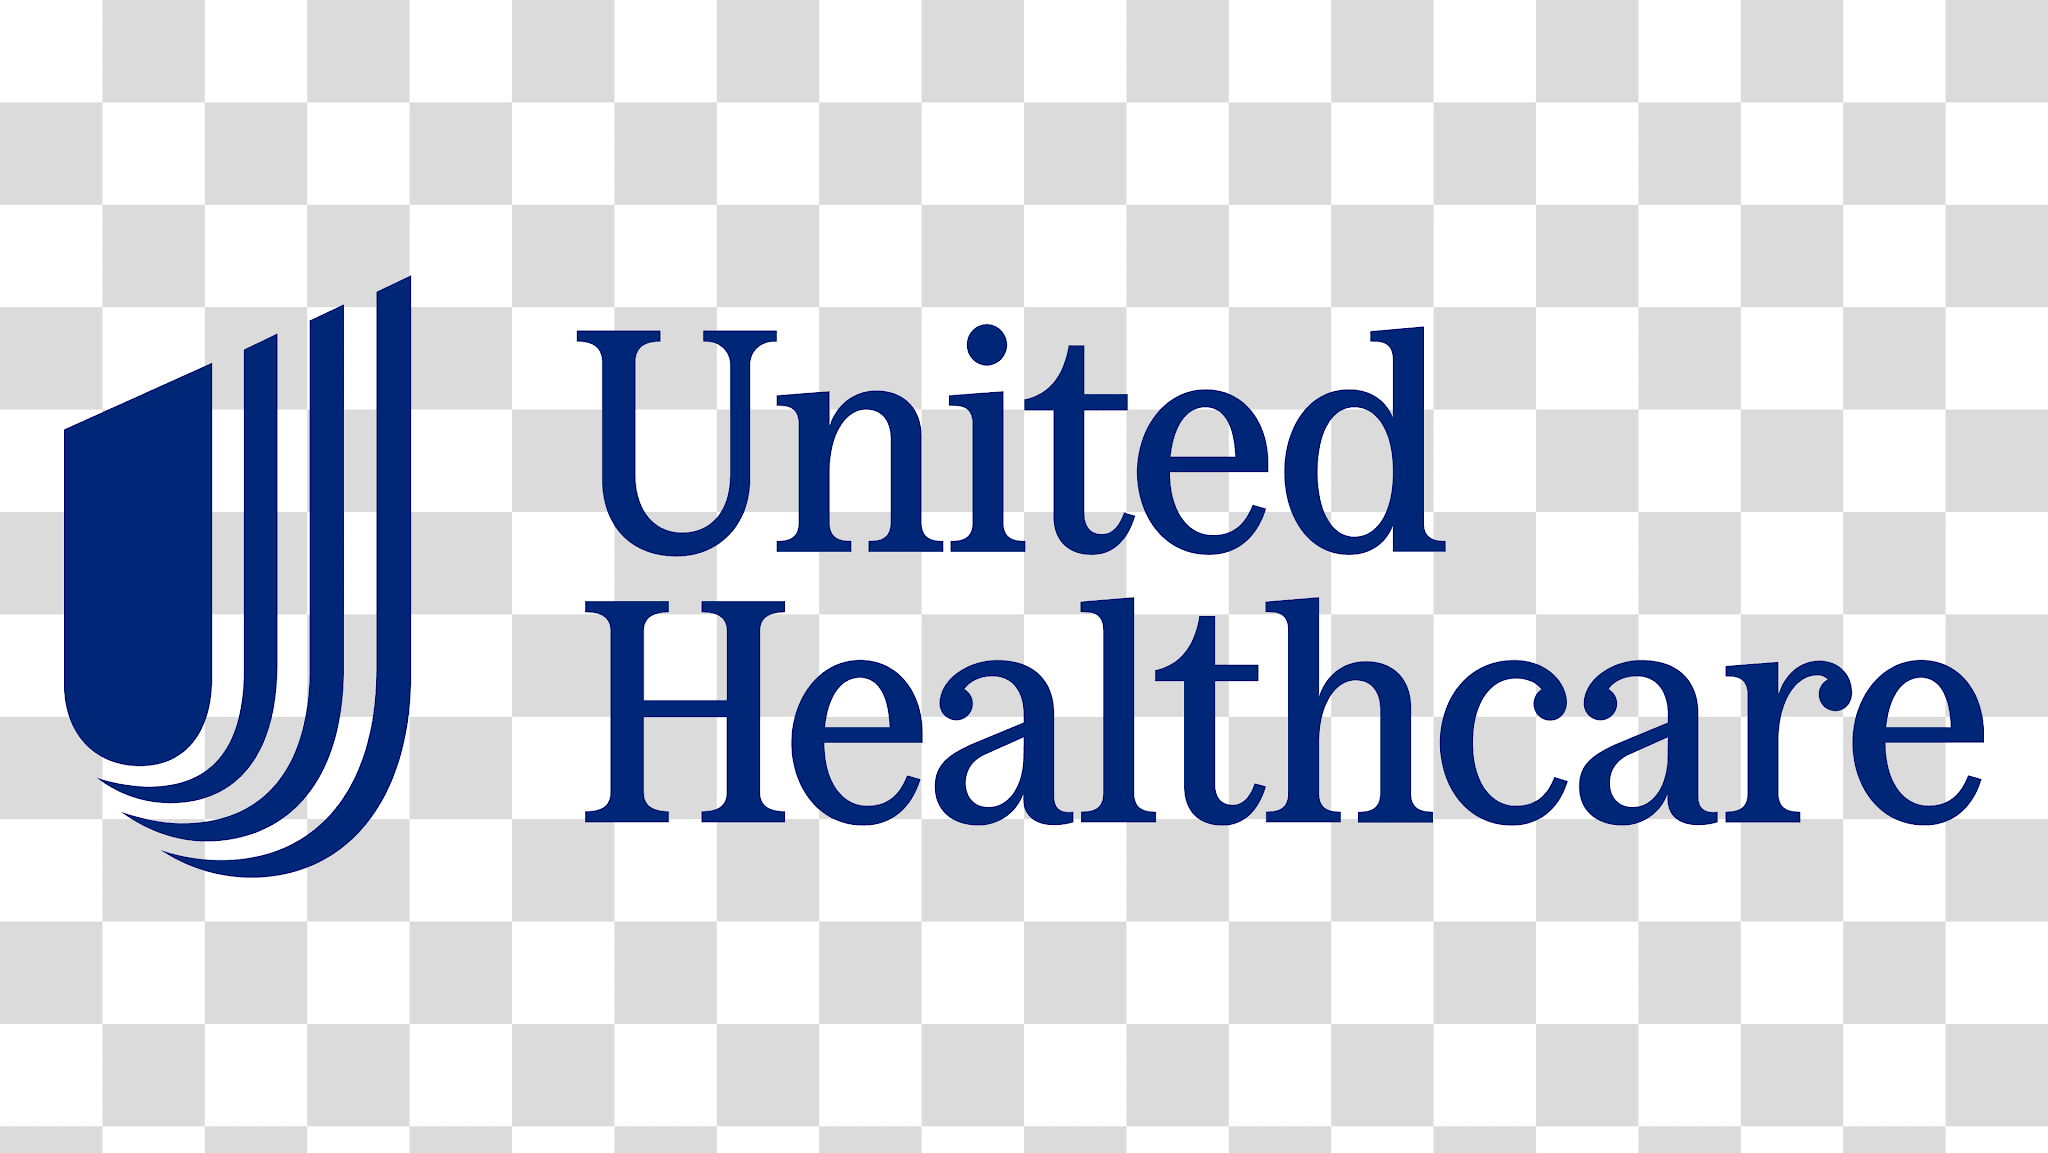 UnitedHealthcare (2020) Logo PNG Transparent Image